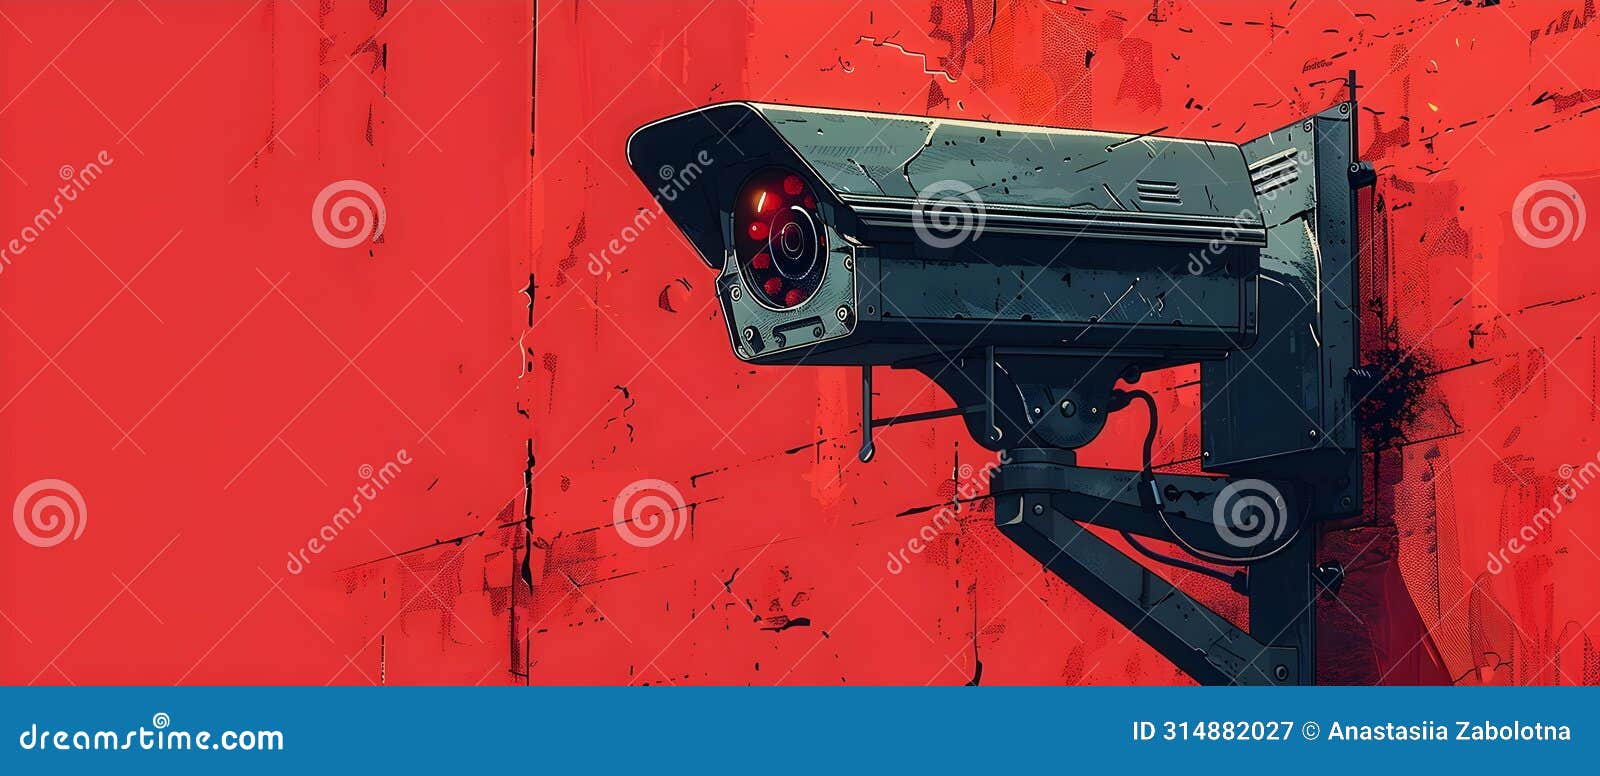 stylized surveillance - big brother's gaze. concept orwellian surveillance, intrusive monitoring,